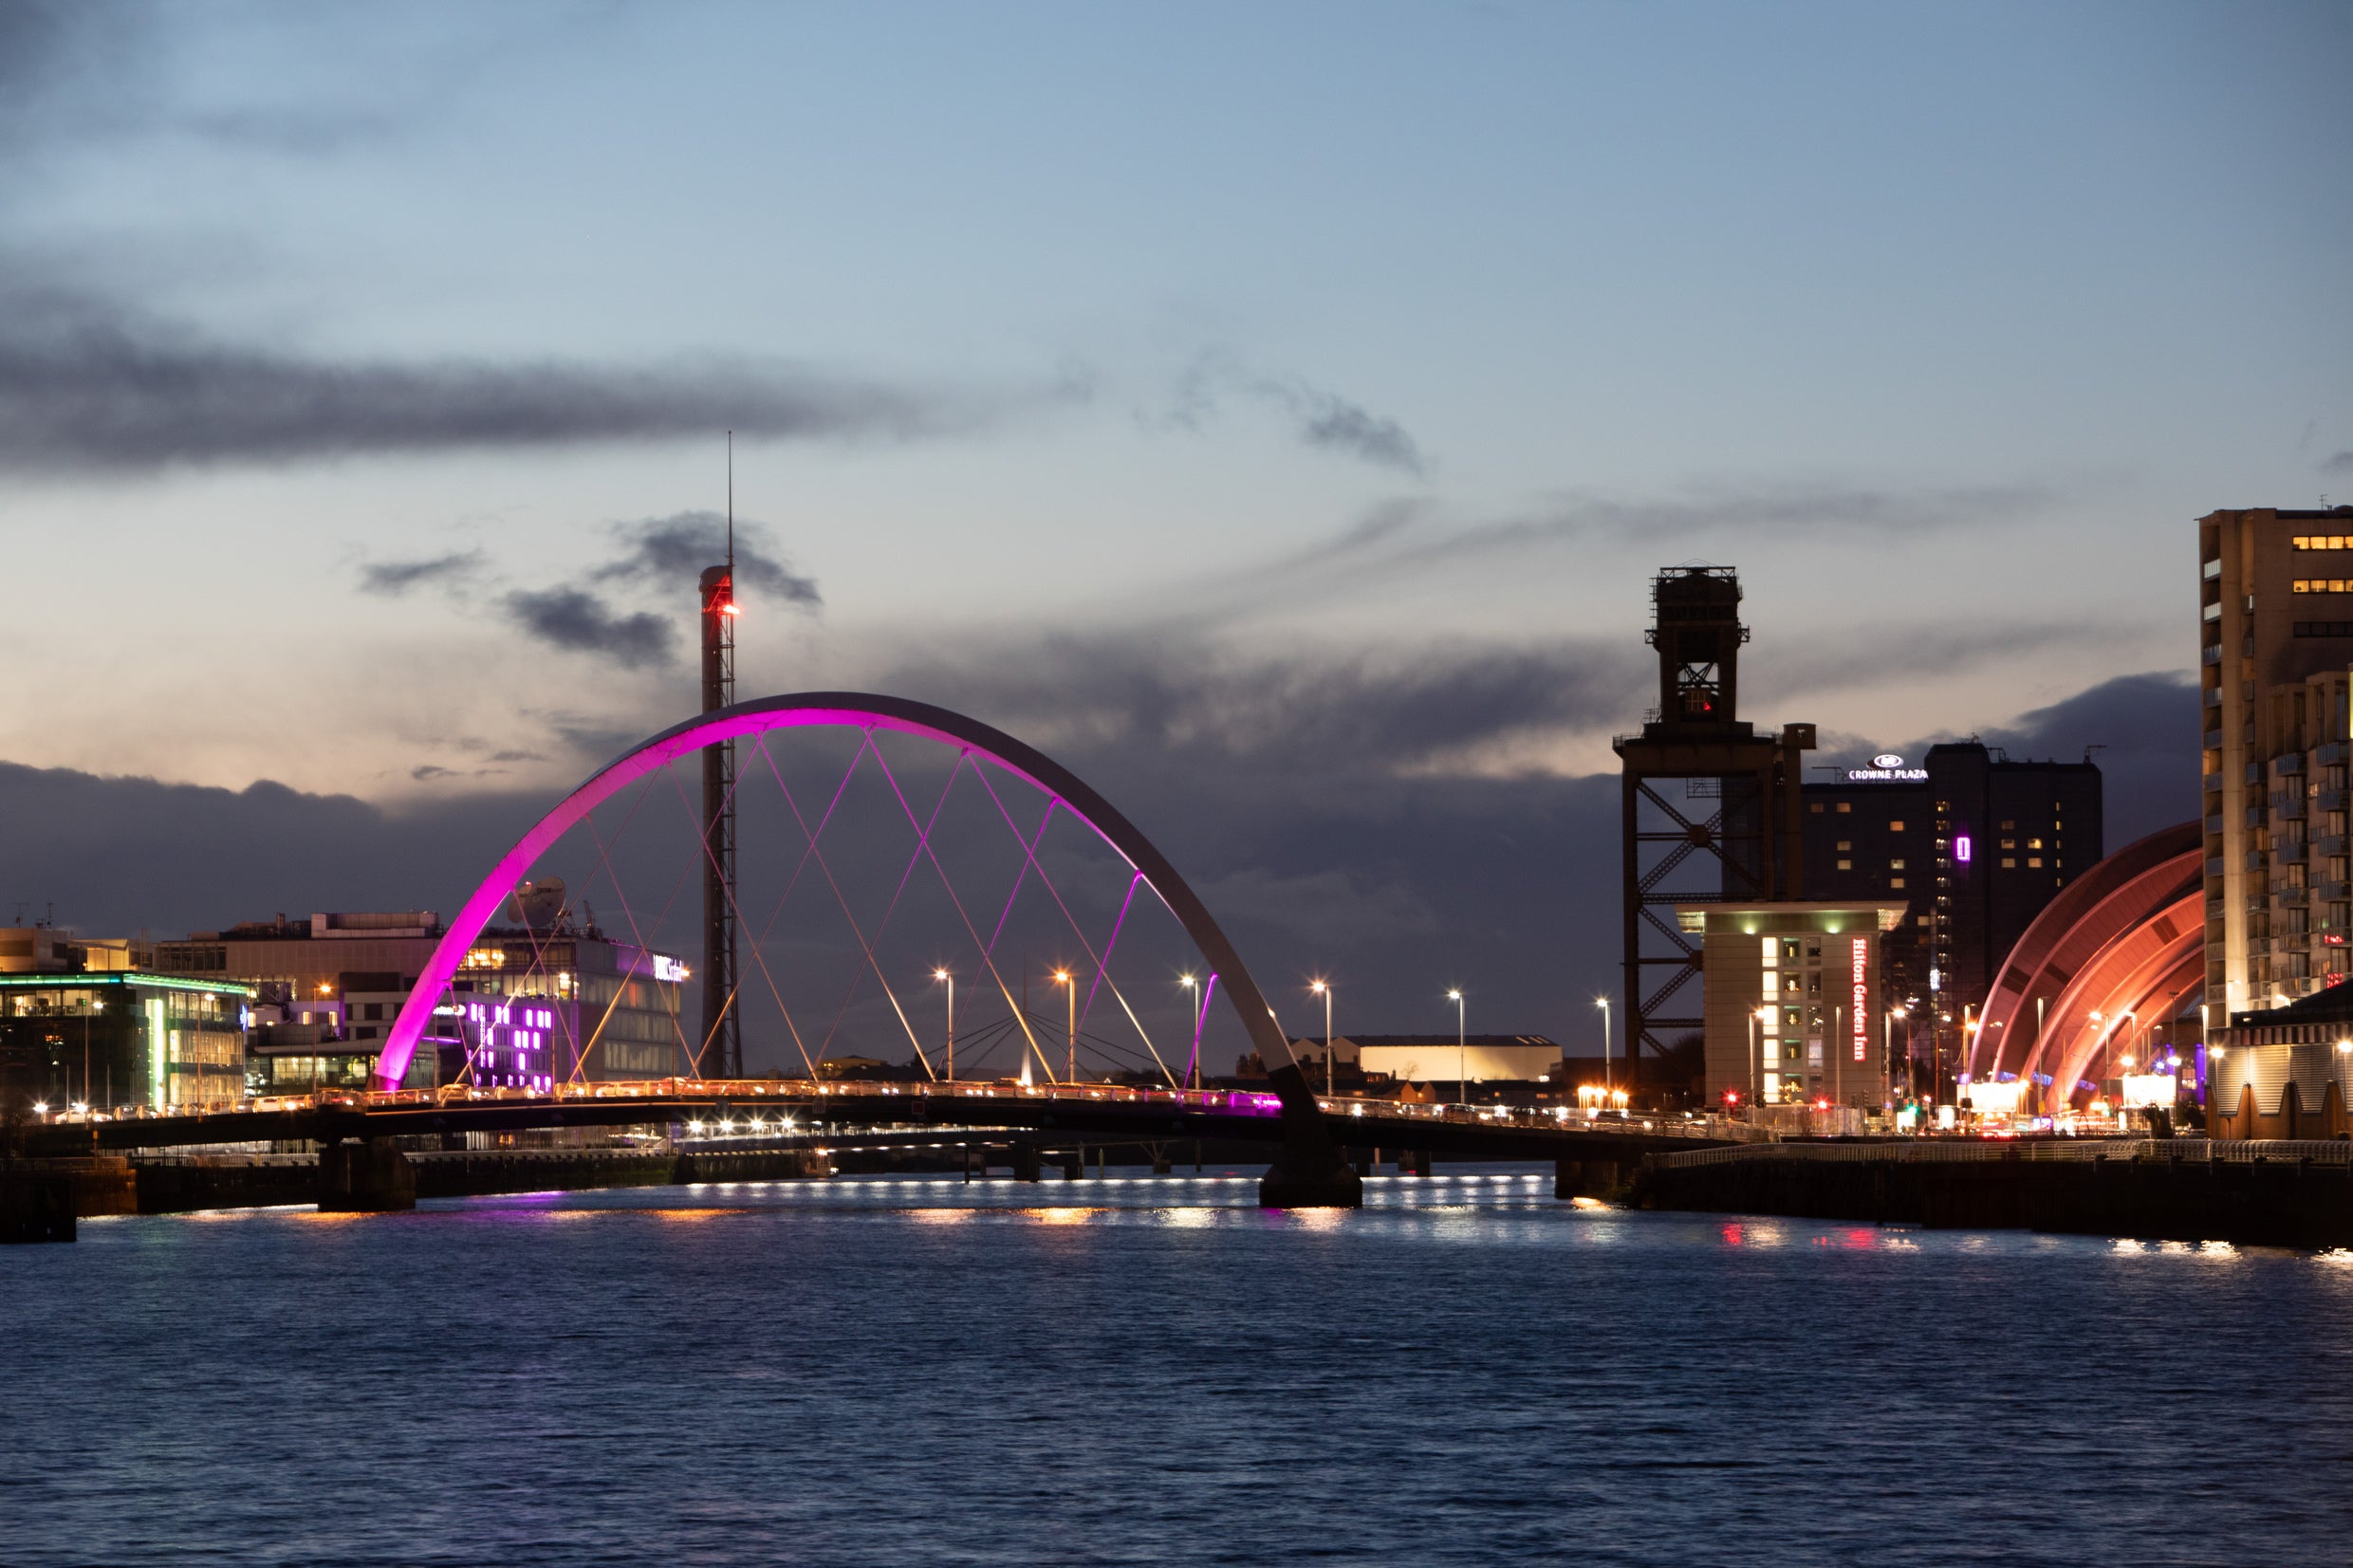 Glasgow’s skyline with the Clyde Bridge